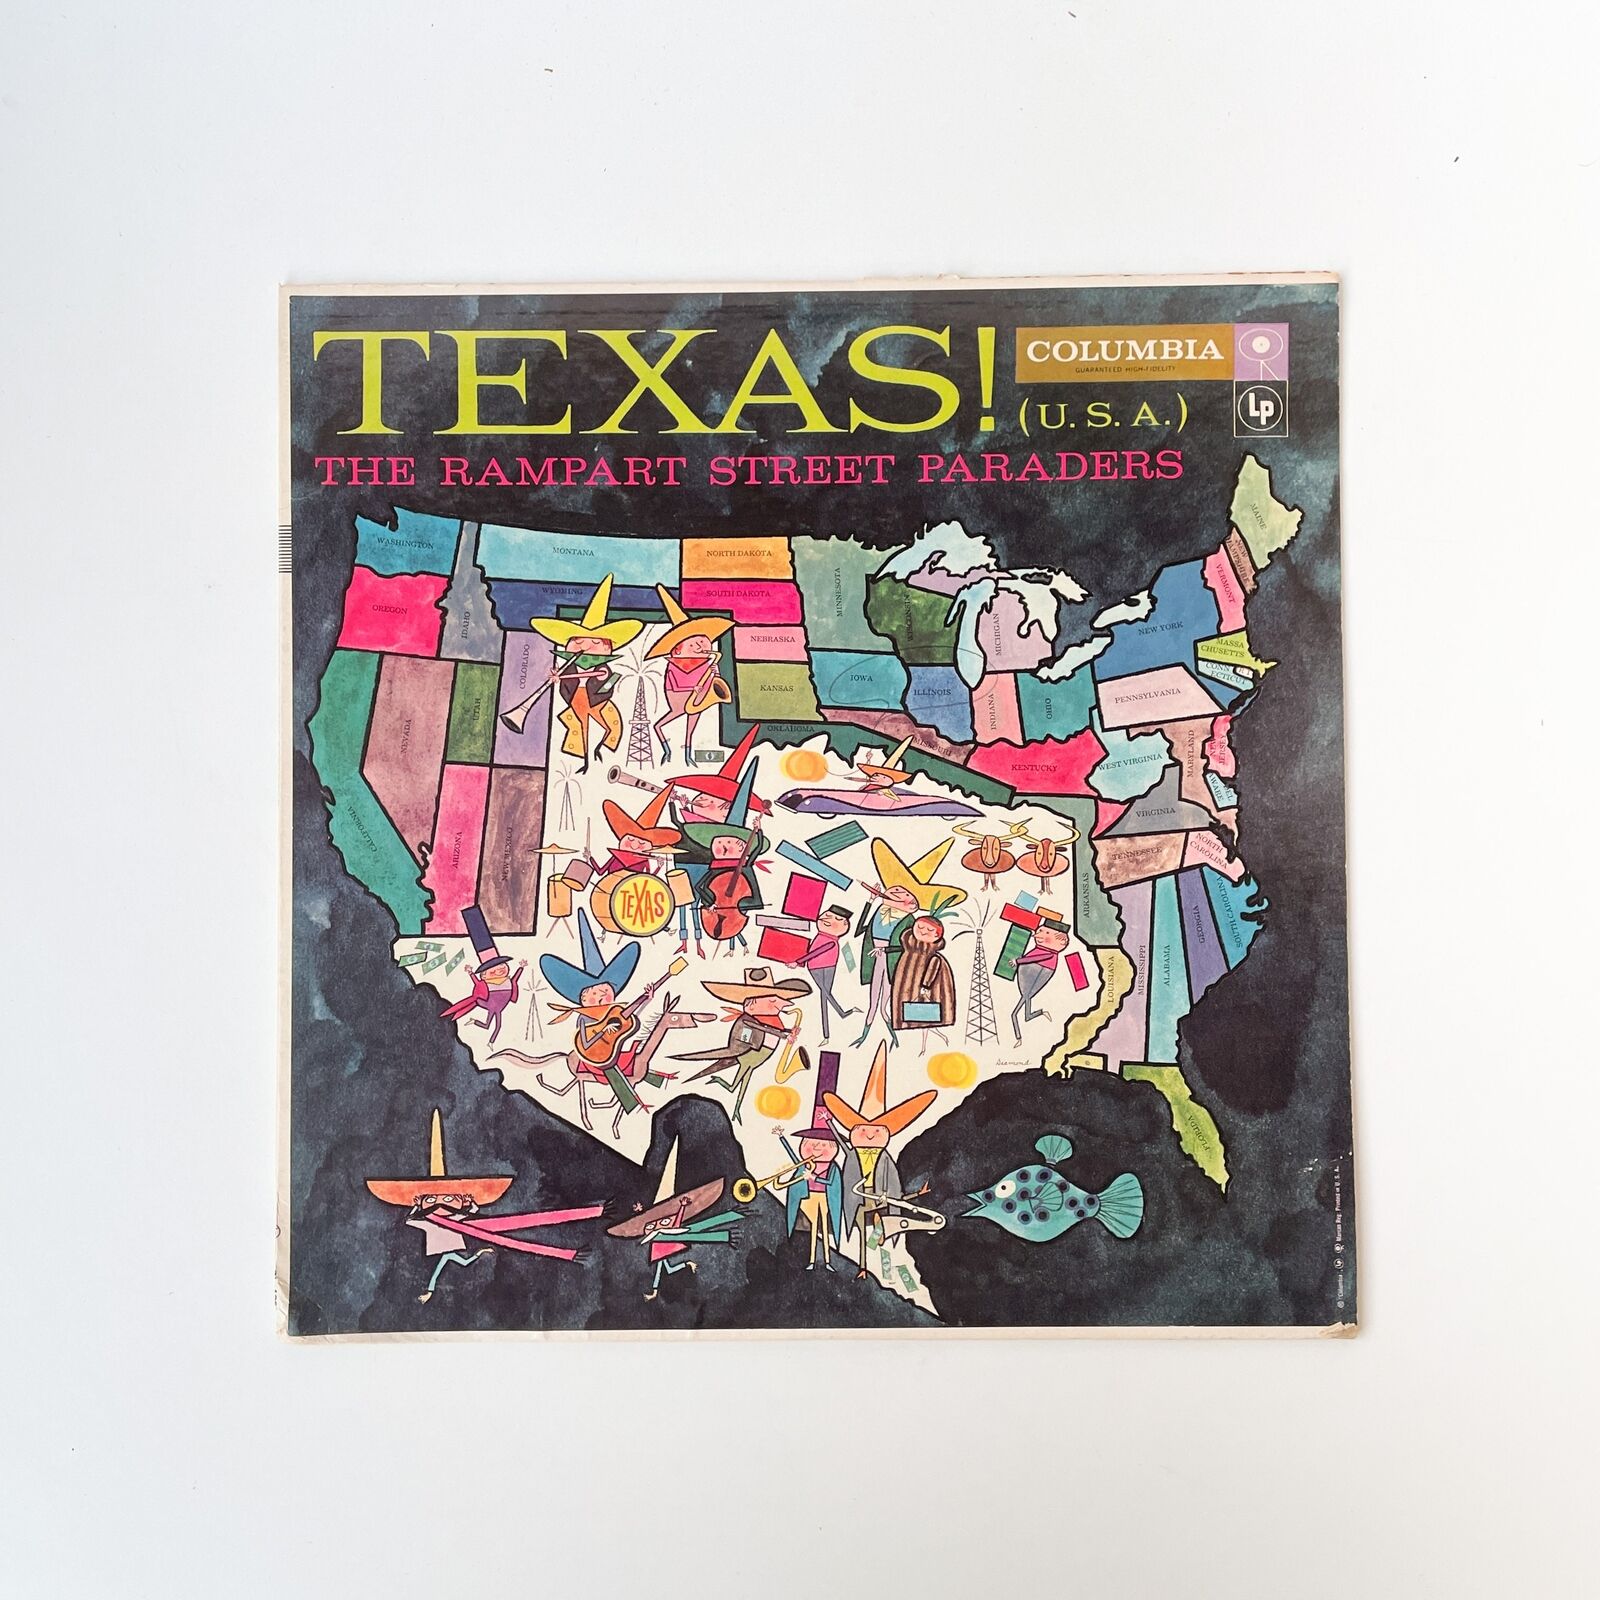 The Rampart Street Paraders - Texas U.S.A. - Vinyl LP Record - 1957